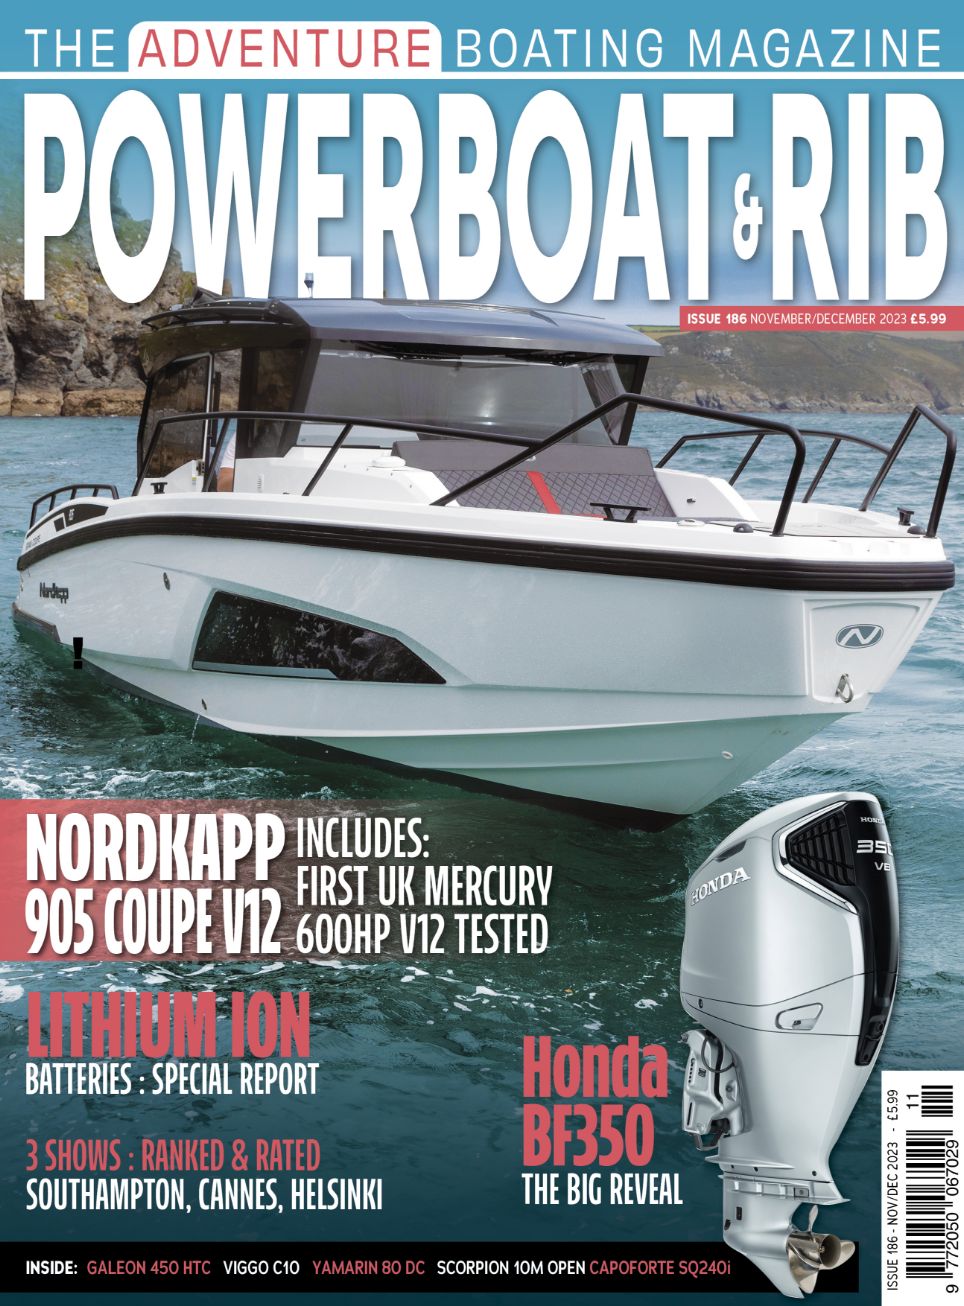 Powerboat and RIB Edition 186